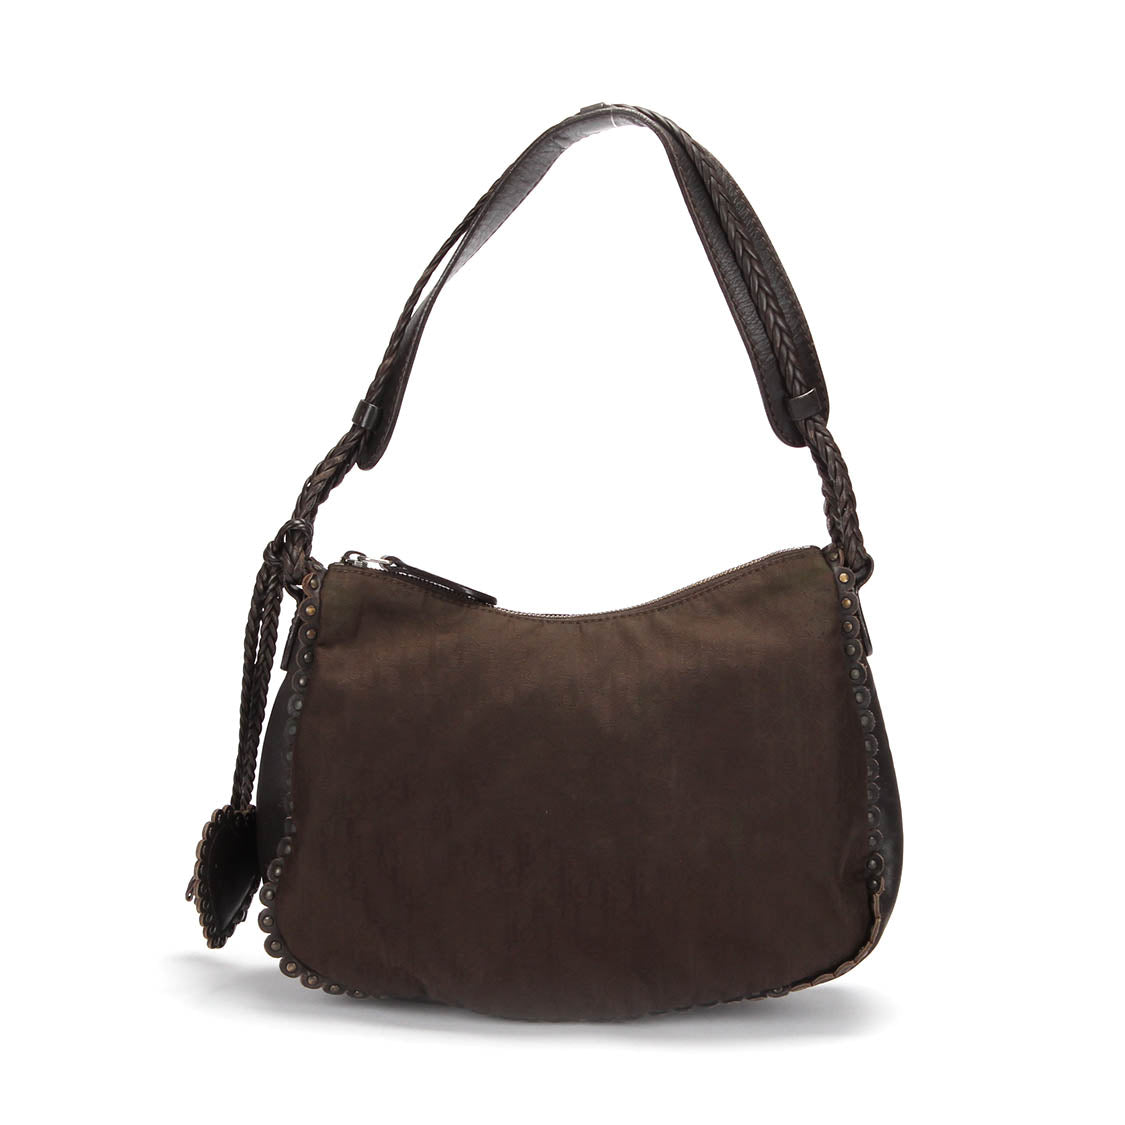 Dior Oblique Canvas Shoulder Bag